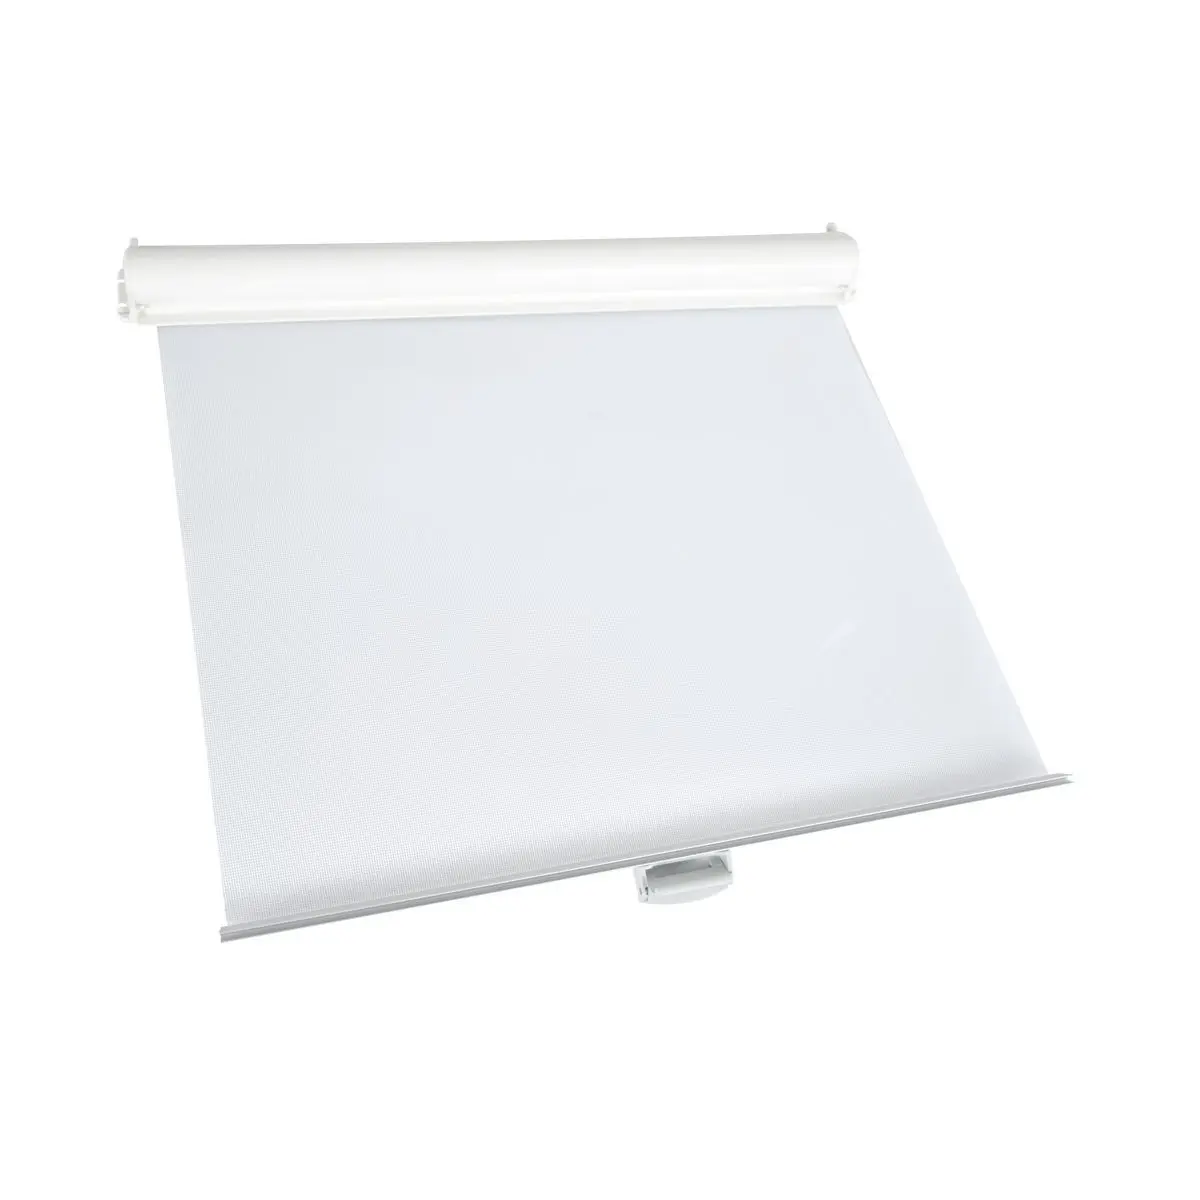 Caseta cpl. 1430 x 750 mm - alb sidefat pentru plasa de musca